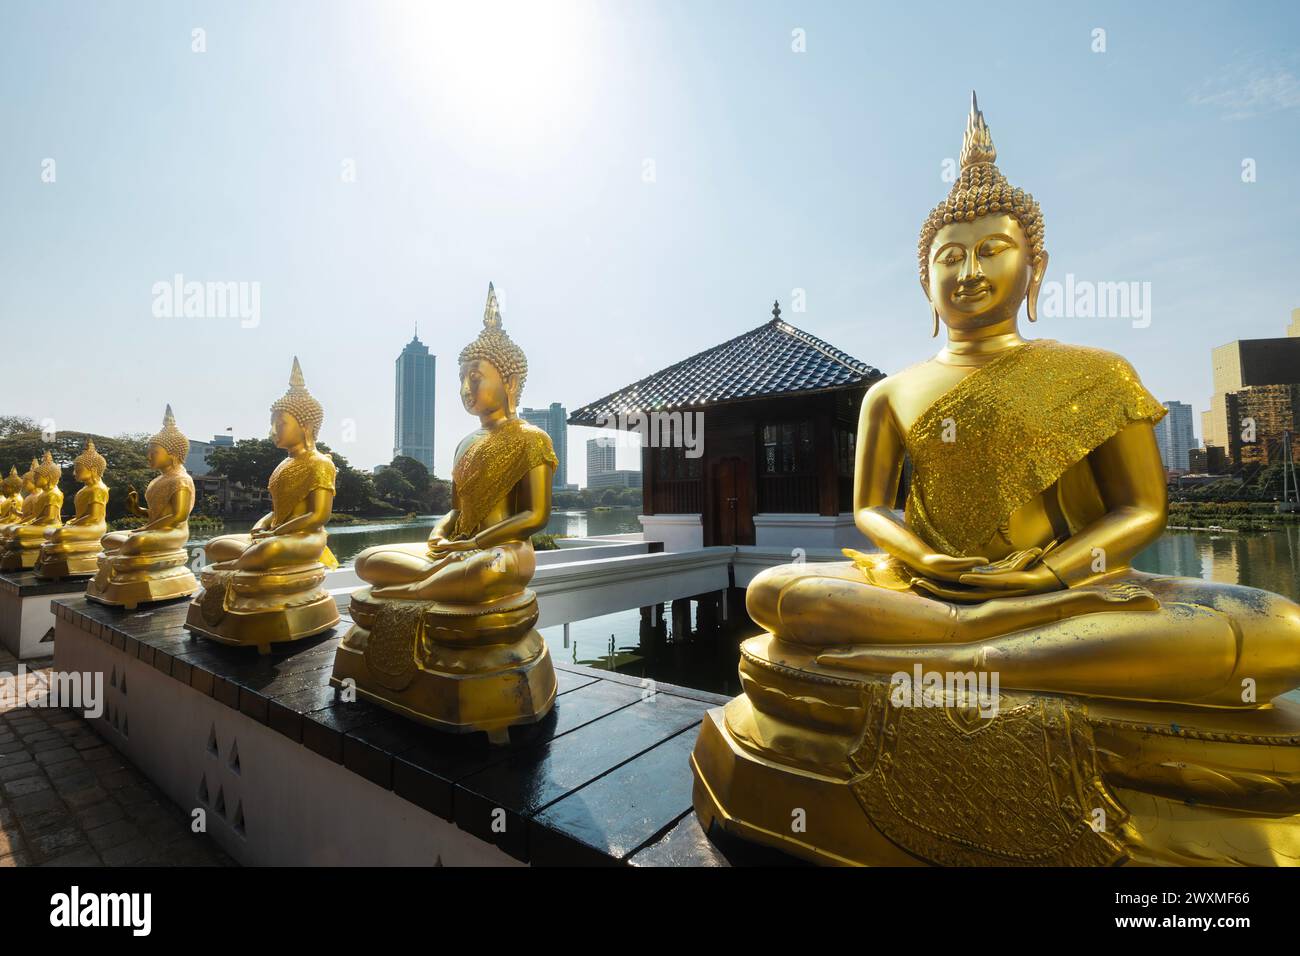 Buddhistischer Tempel auf dem See in Colombo Innenstadt. Seema Malaka Tempel in Sri Lanka. Stockfoto